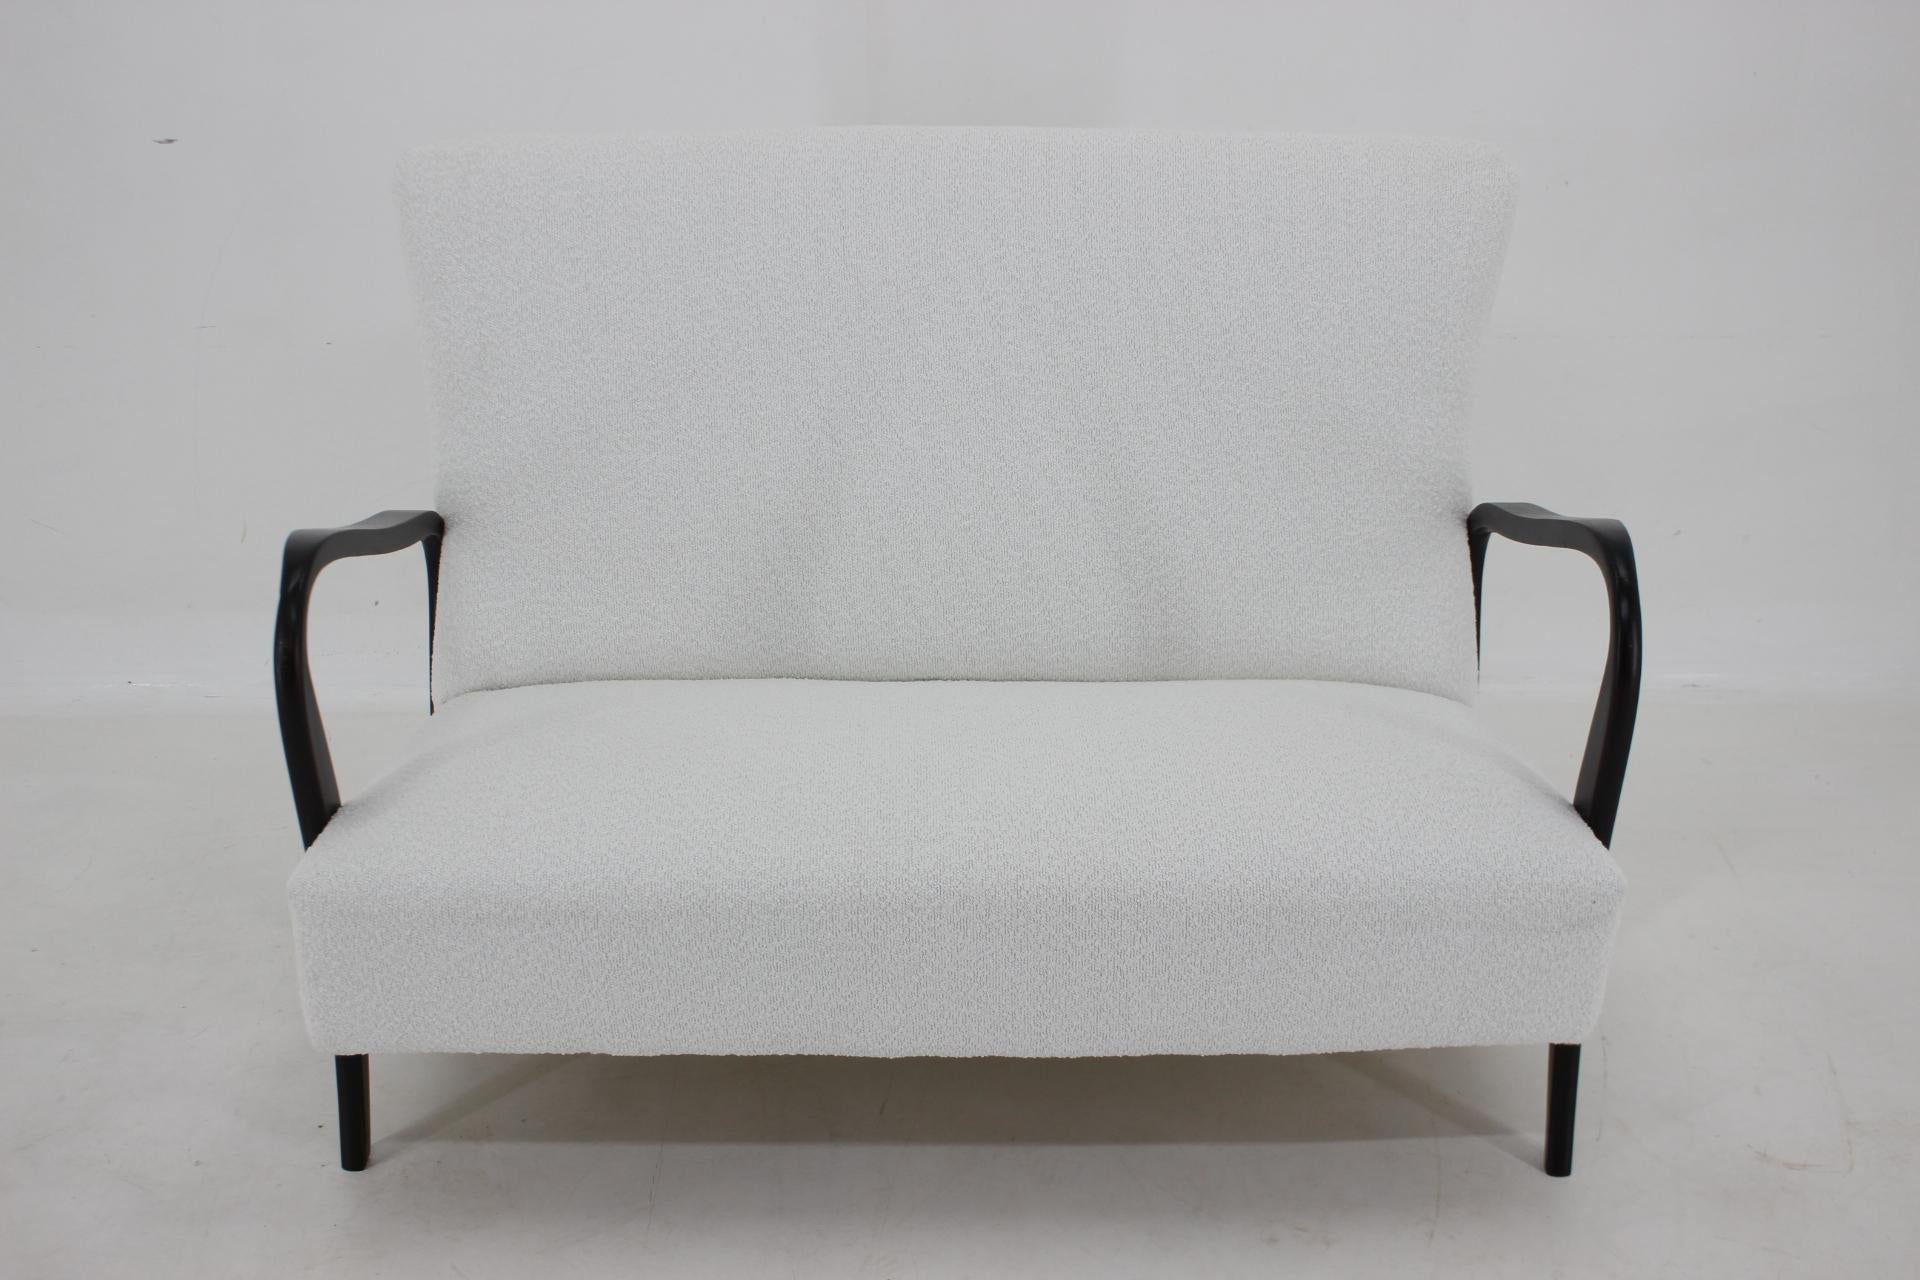 - newly upholstered in white Boucle fabric
- carefully refurbished